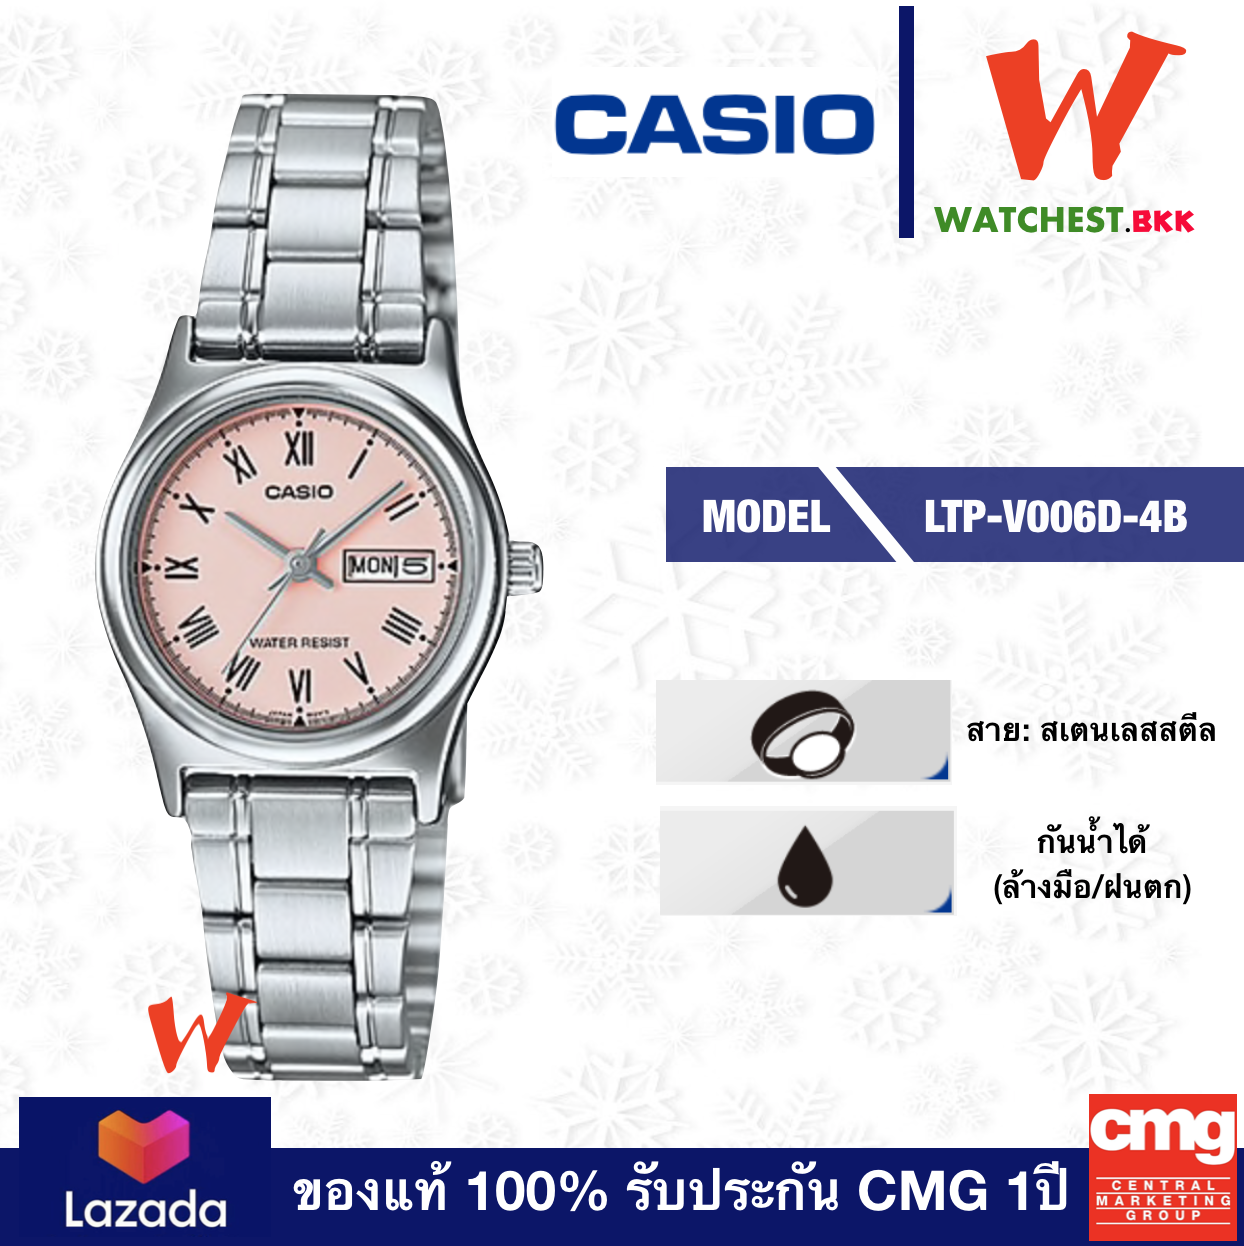 casio นาฬิกาข้อมือผู้หญิง สายสเตนเลส รุ่น LTP-V006D-4B คาสิโอ้ สายเหล็ก ตัวล็อกบานพับ (watchestbkk คาสิโอ แท้ ของแท้100% ประกัน CMG)